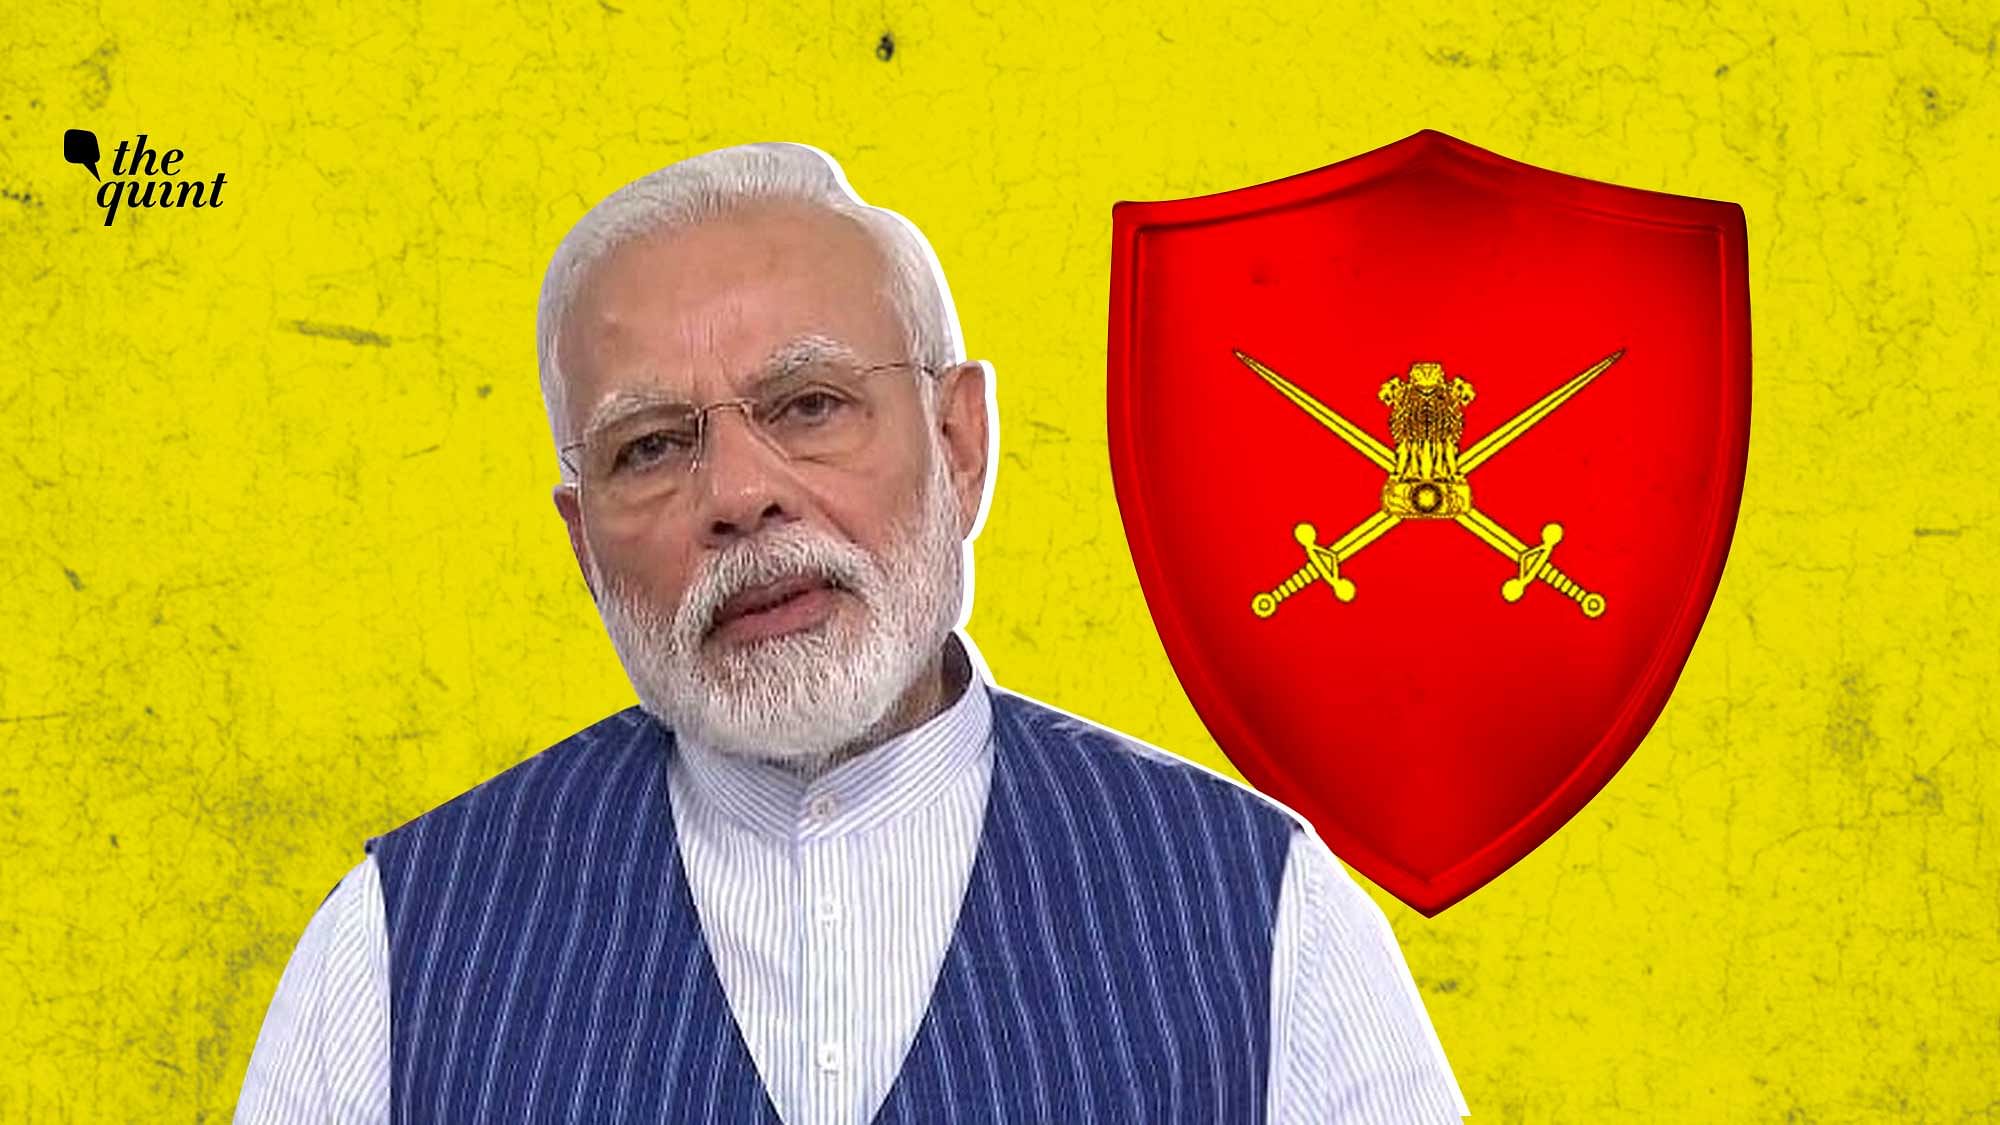 Image of army symbol &amp; PM Modi used for representational purposes.